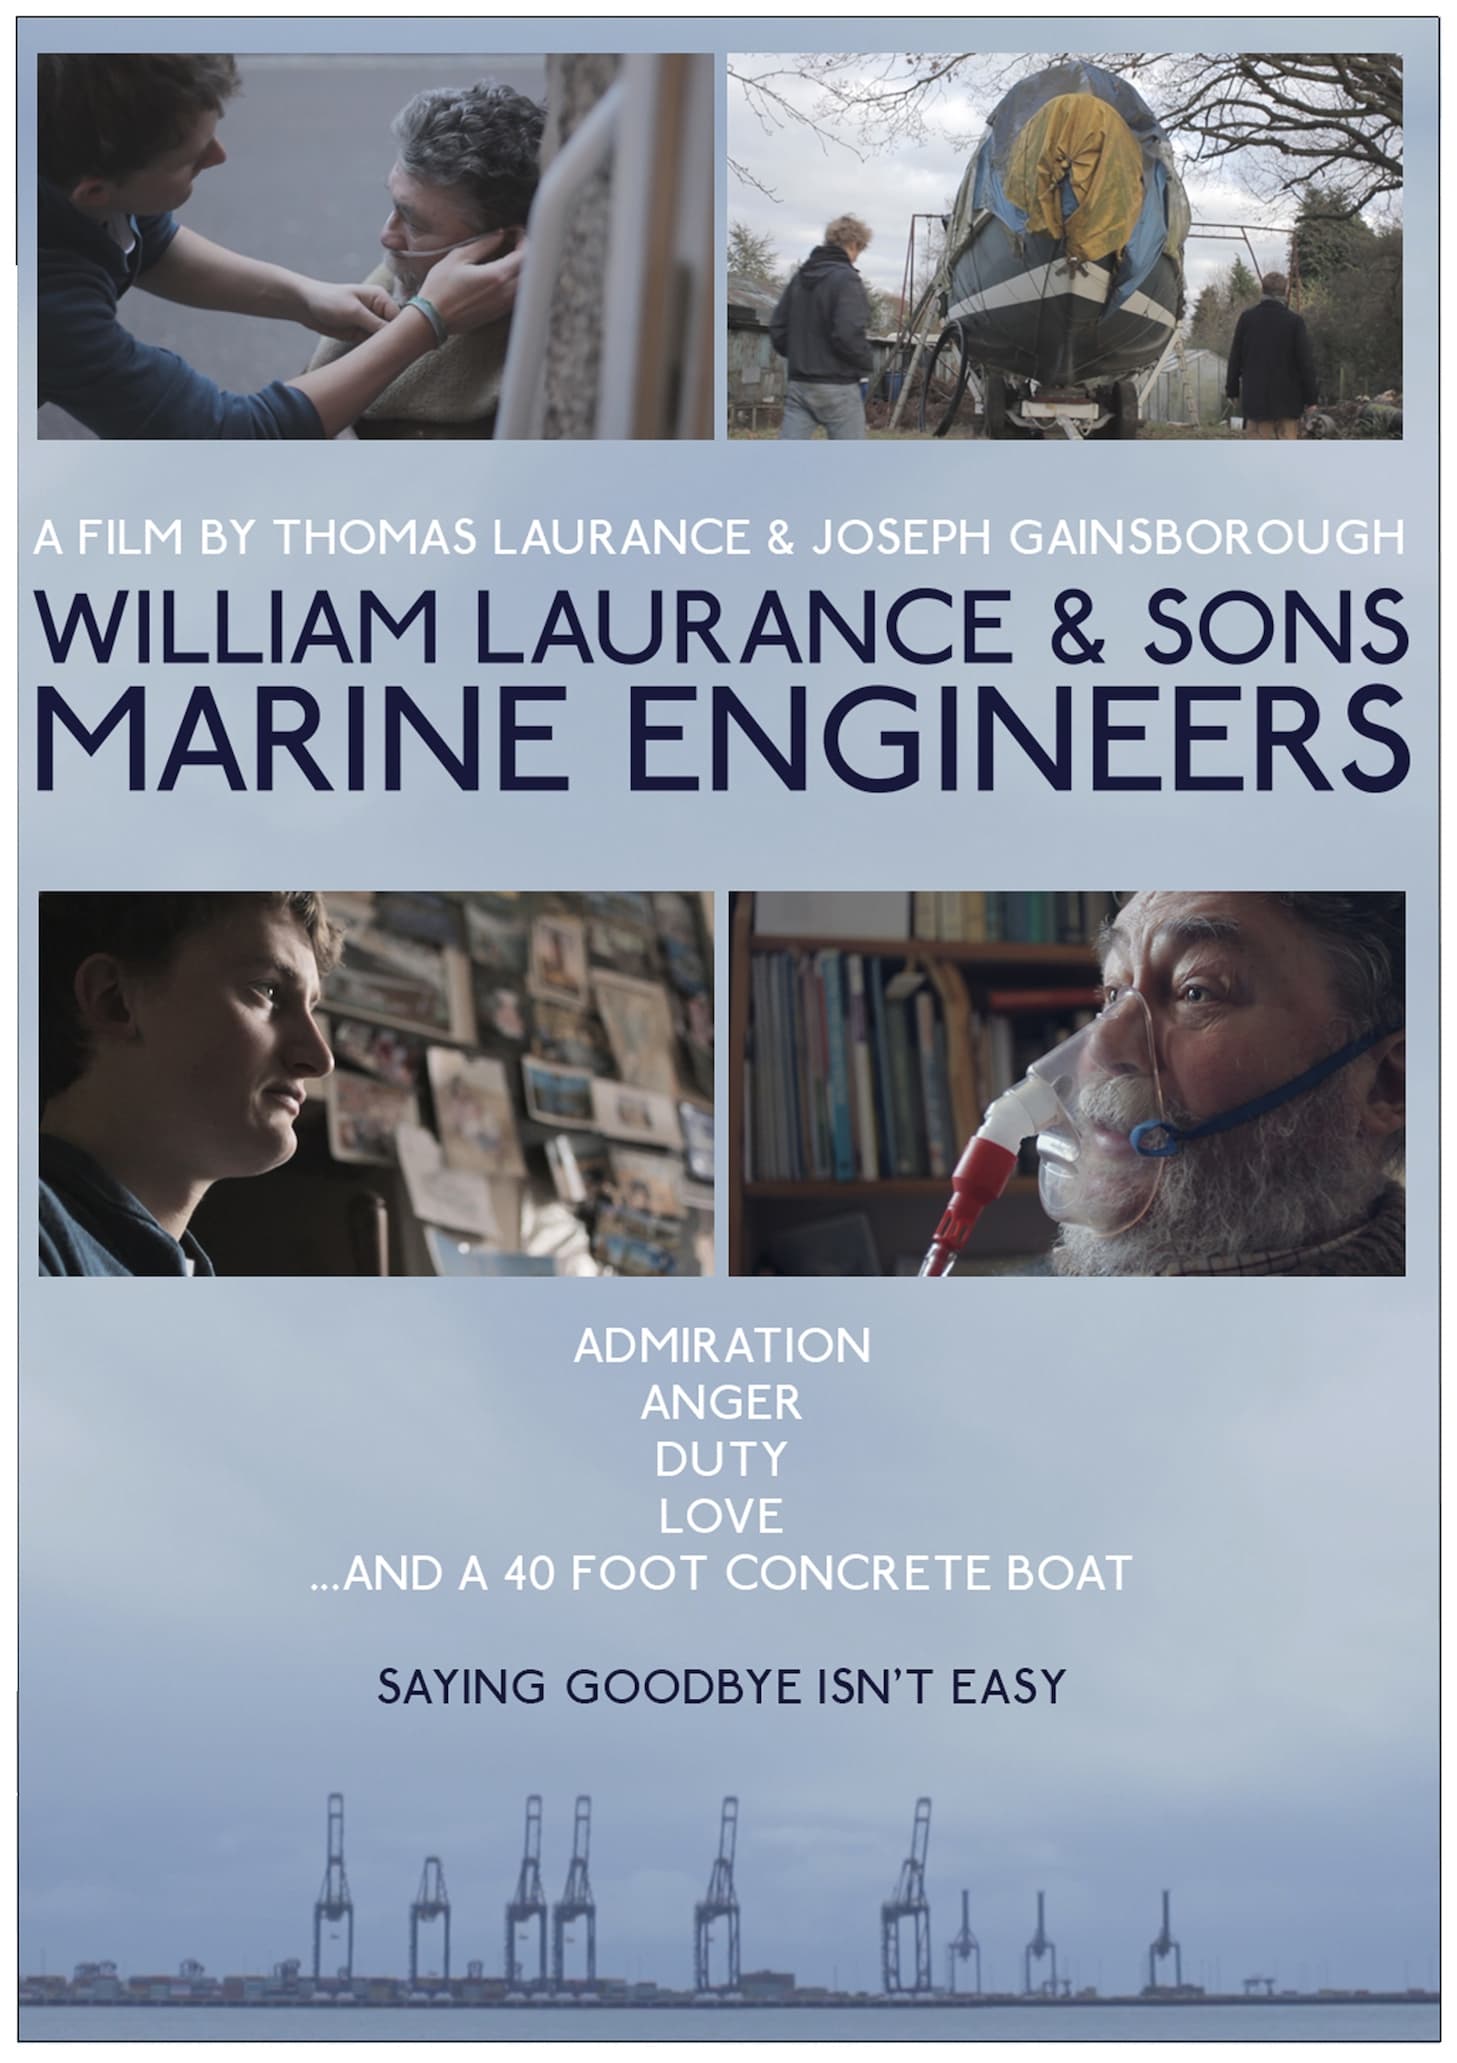 William Laurance & Sons Marine Engineers